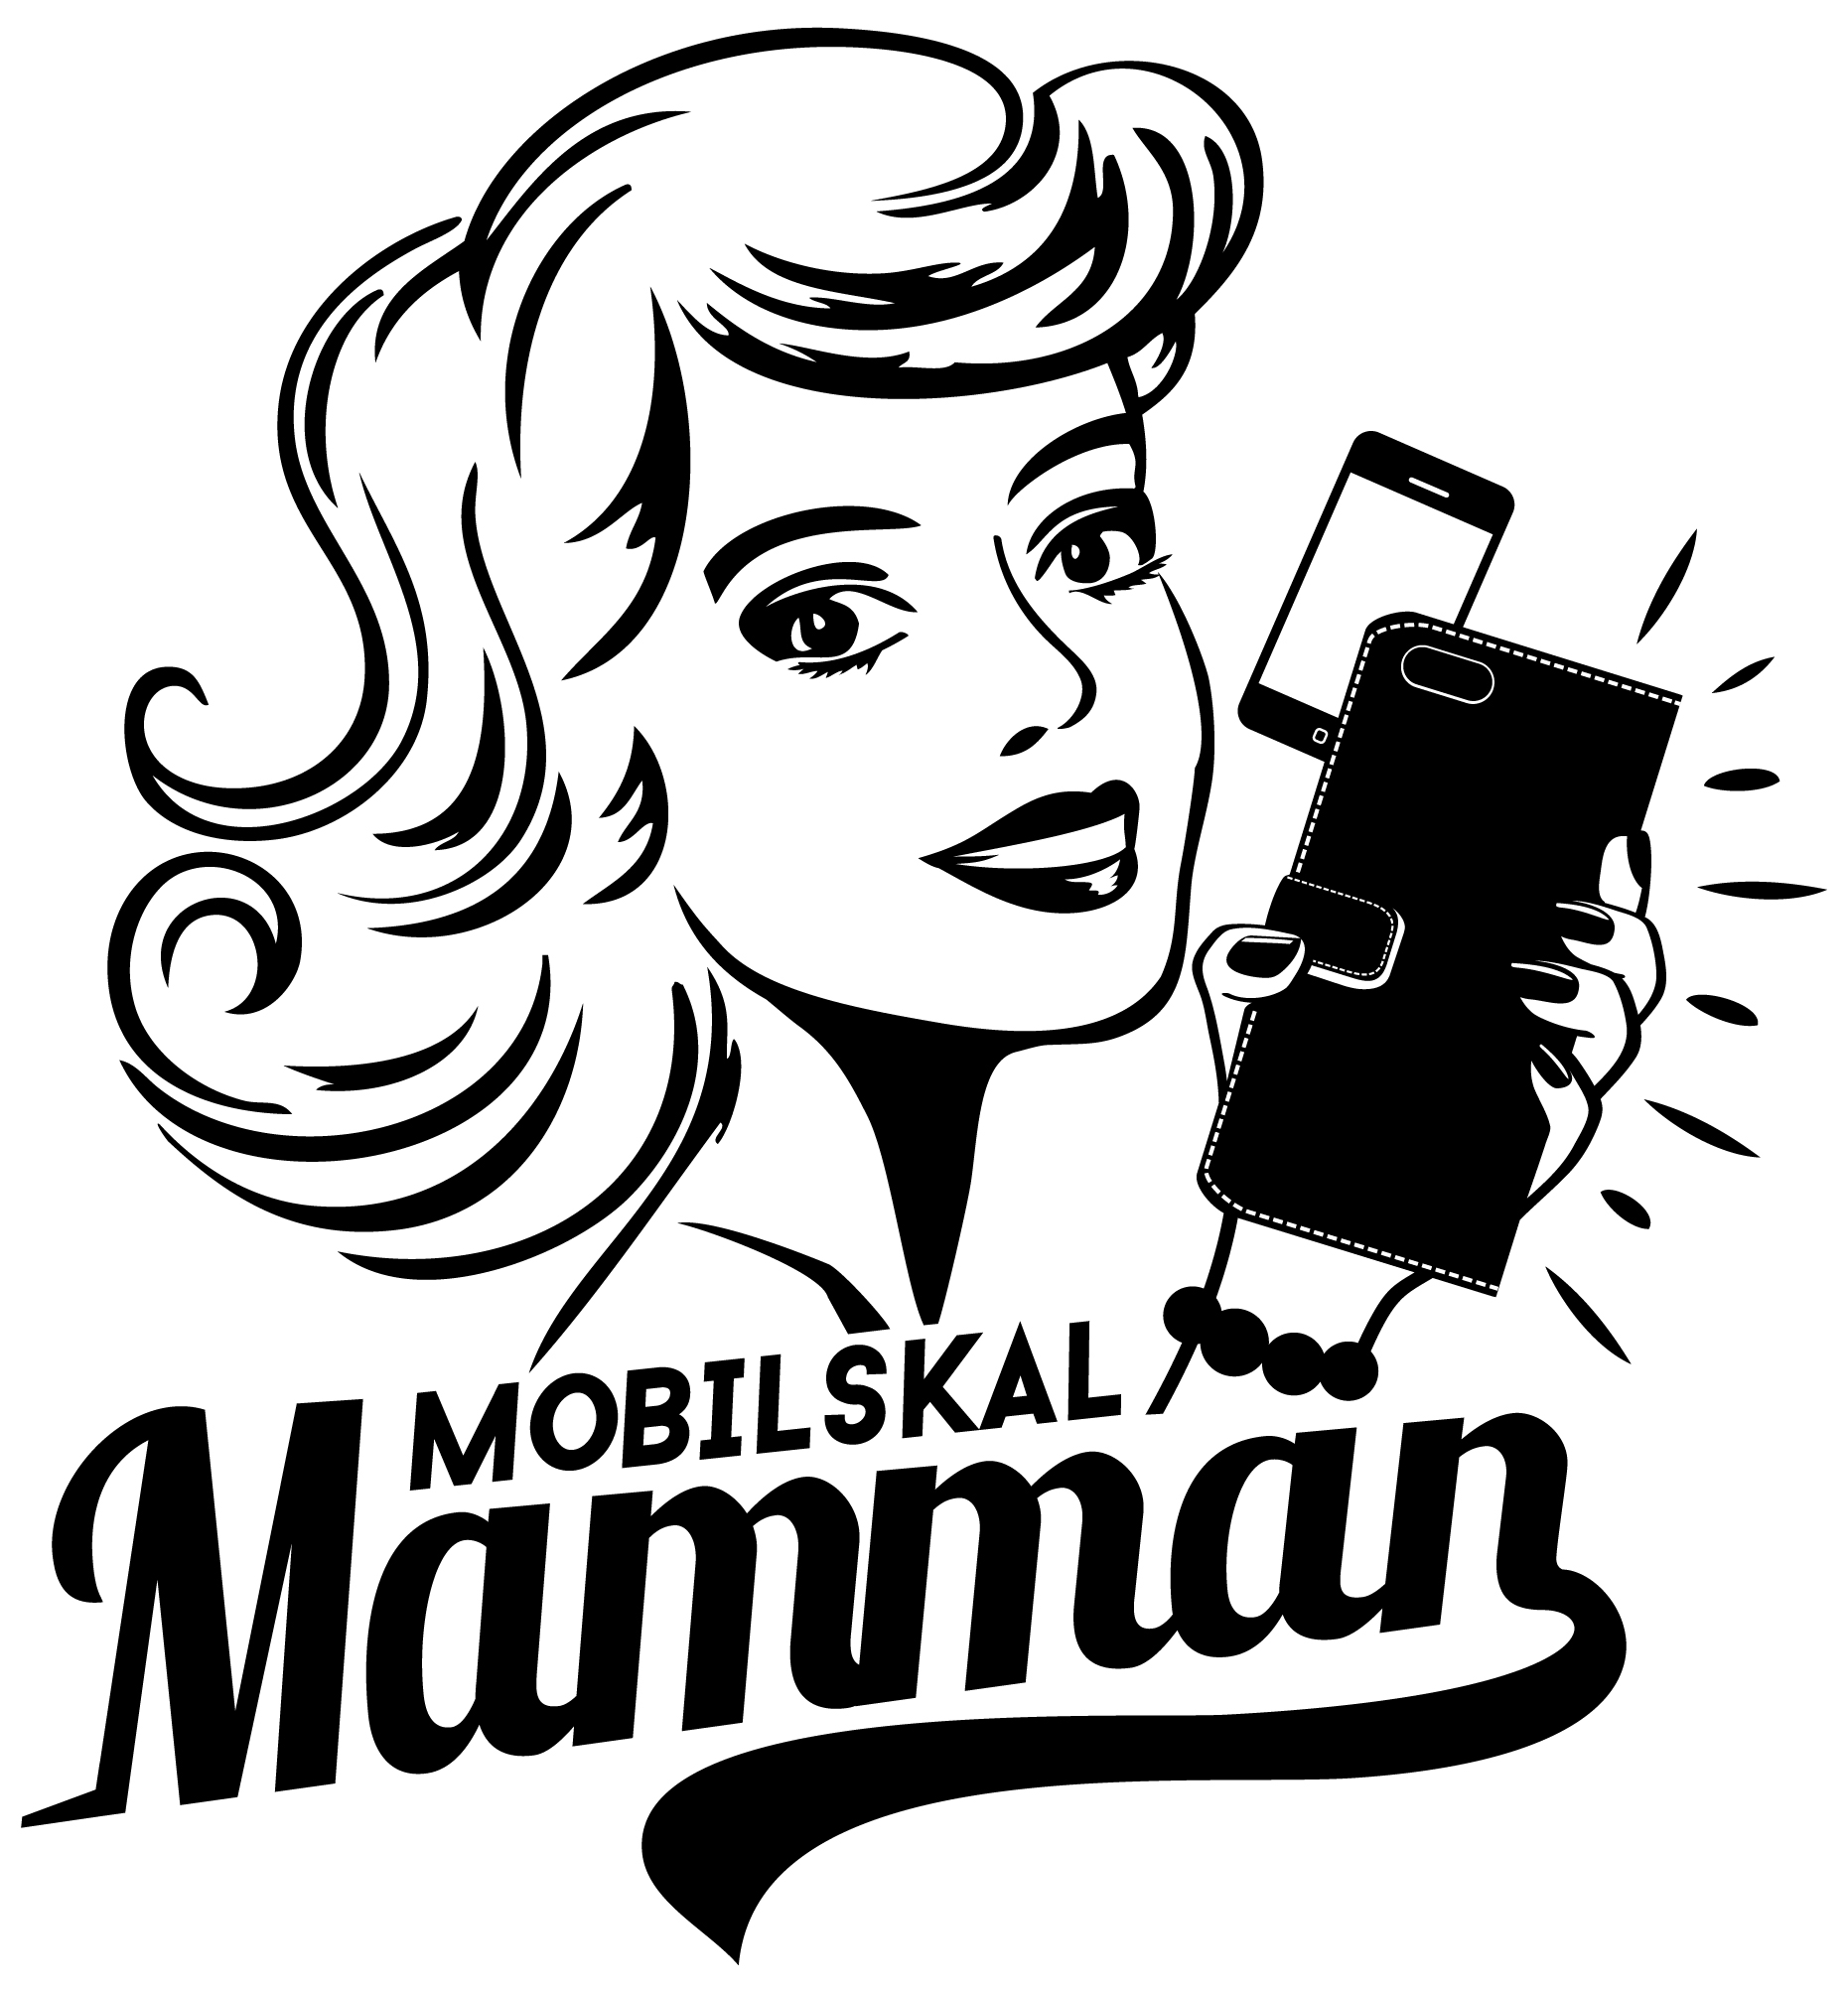 Mobilskal-mamman